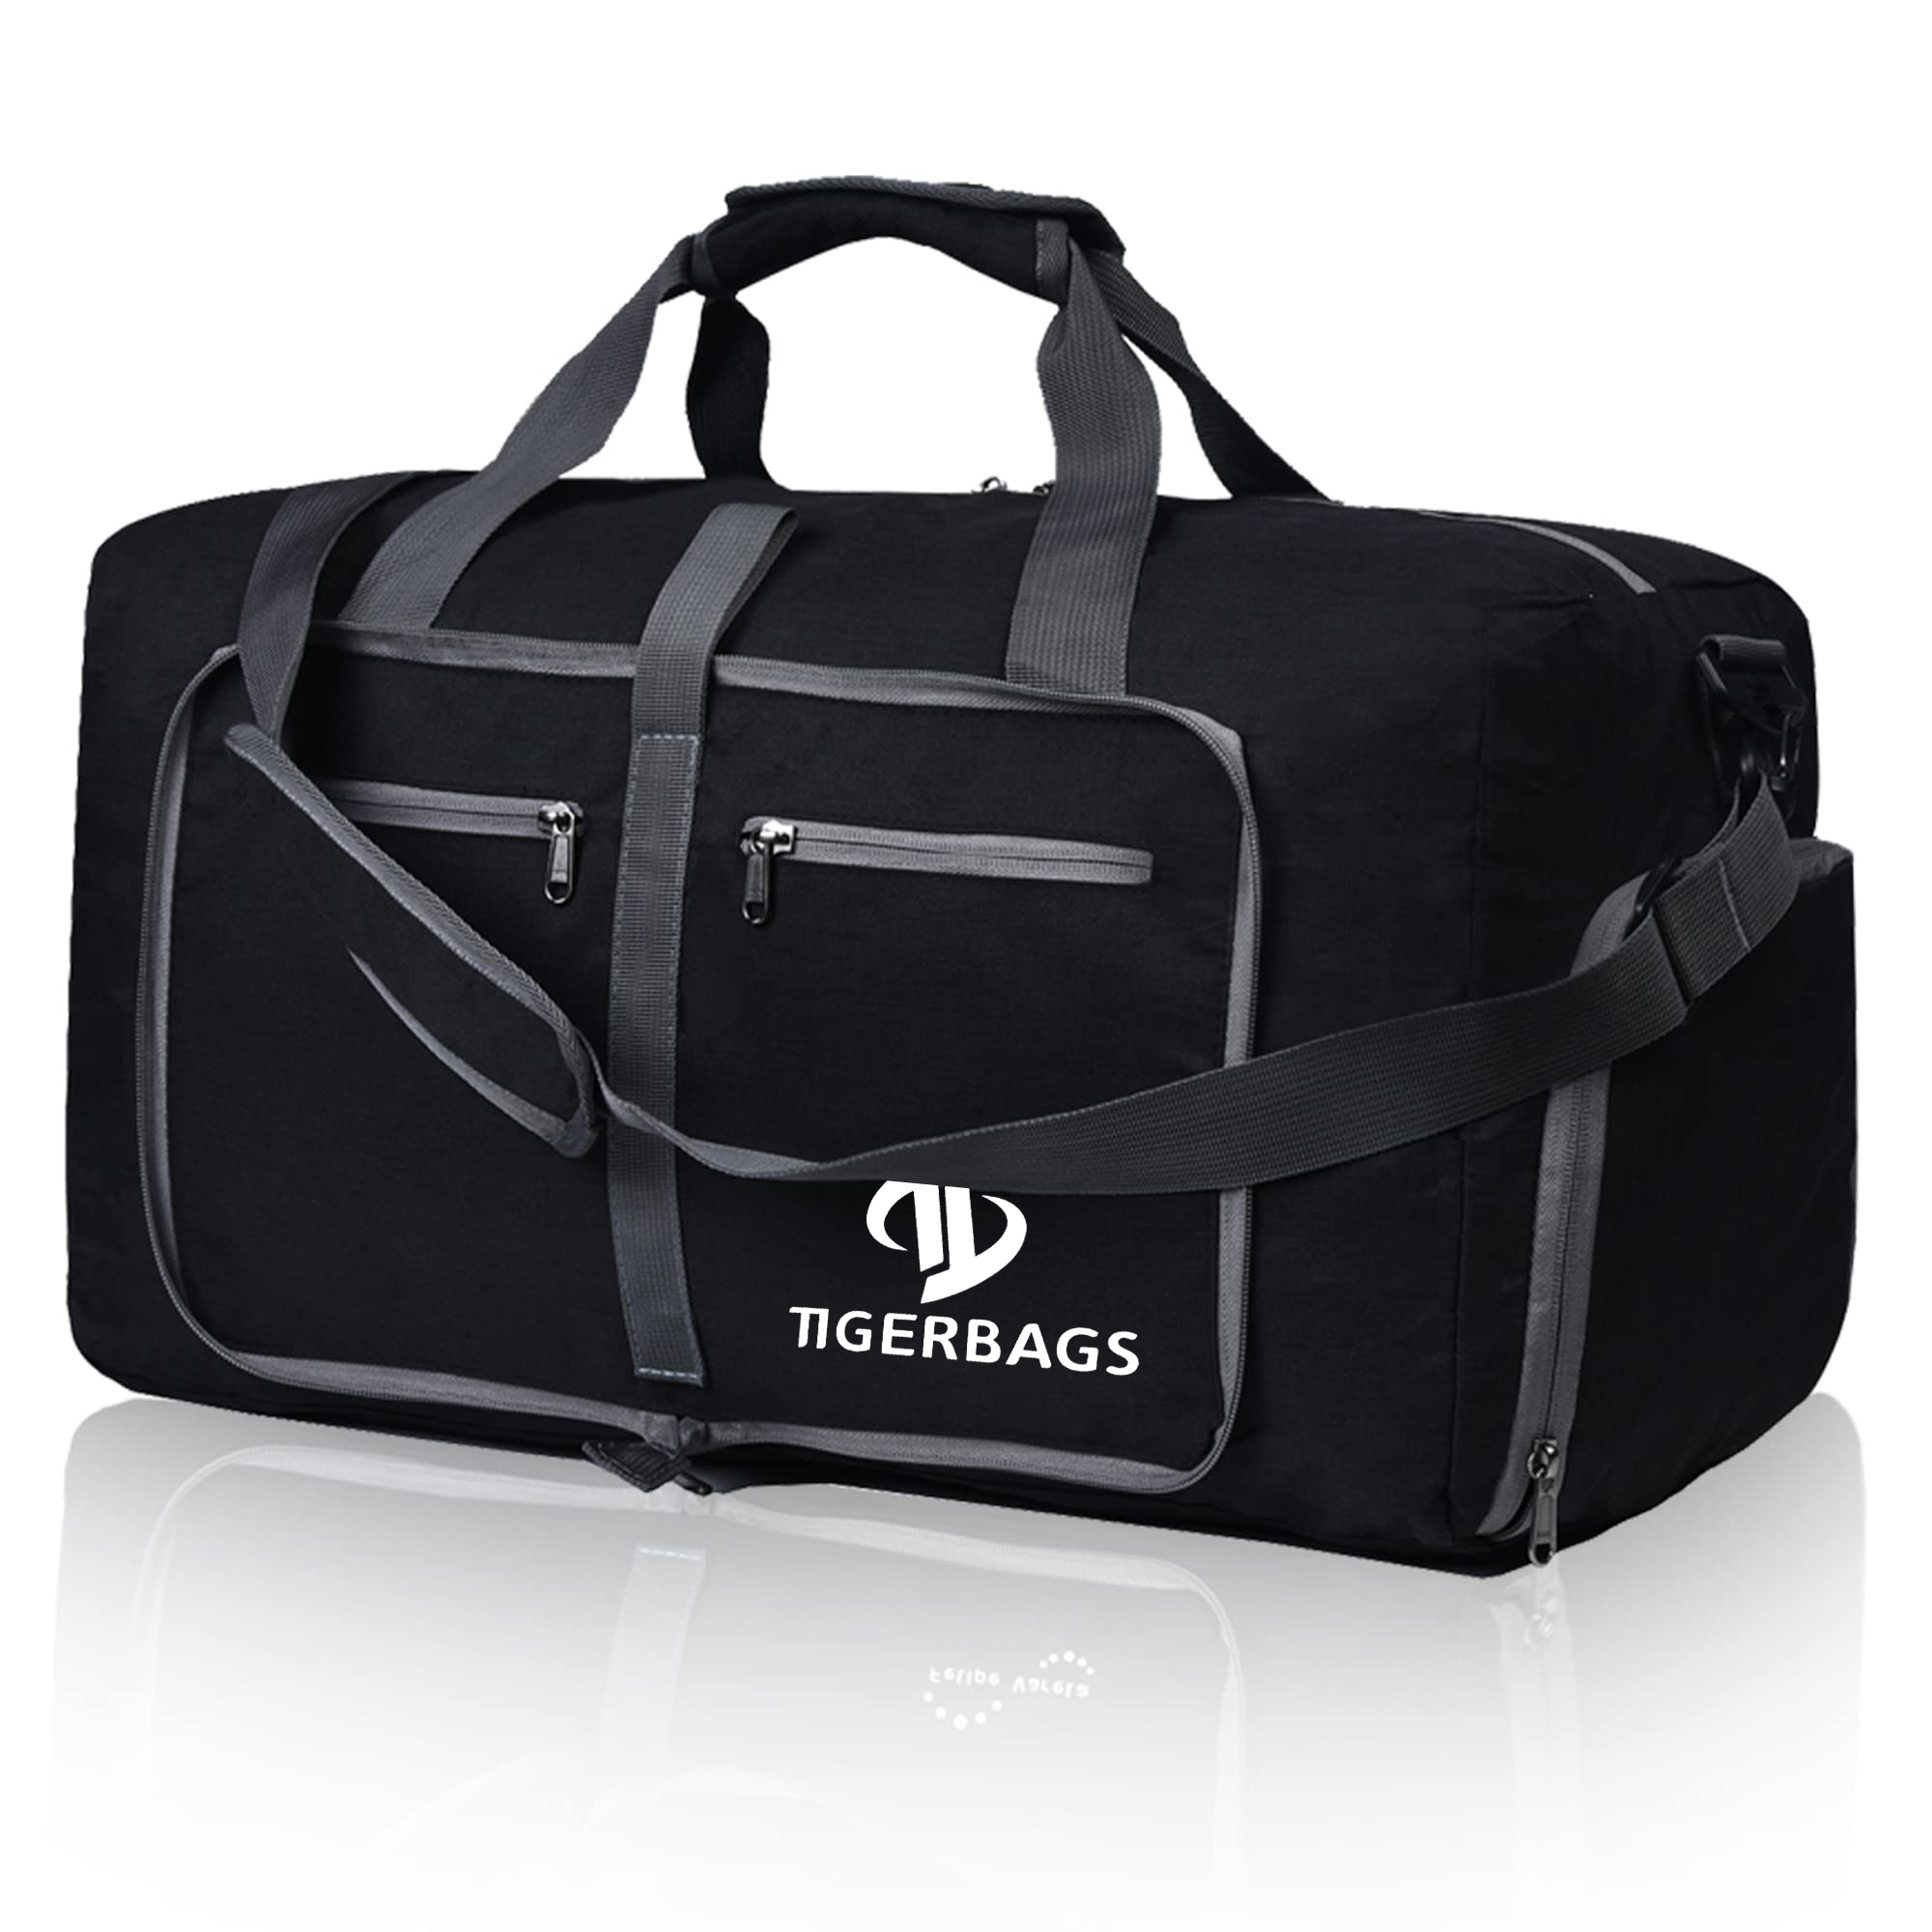 Duffle bag with shoe compartment adjustable shoulder strap, foldable travel bag